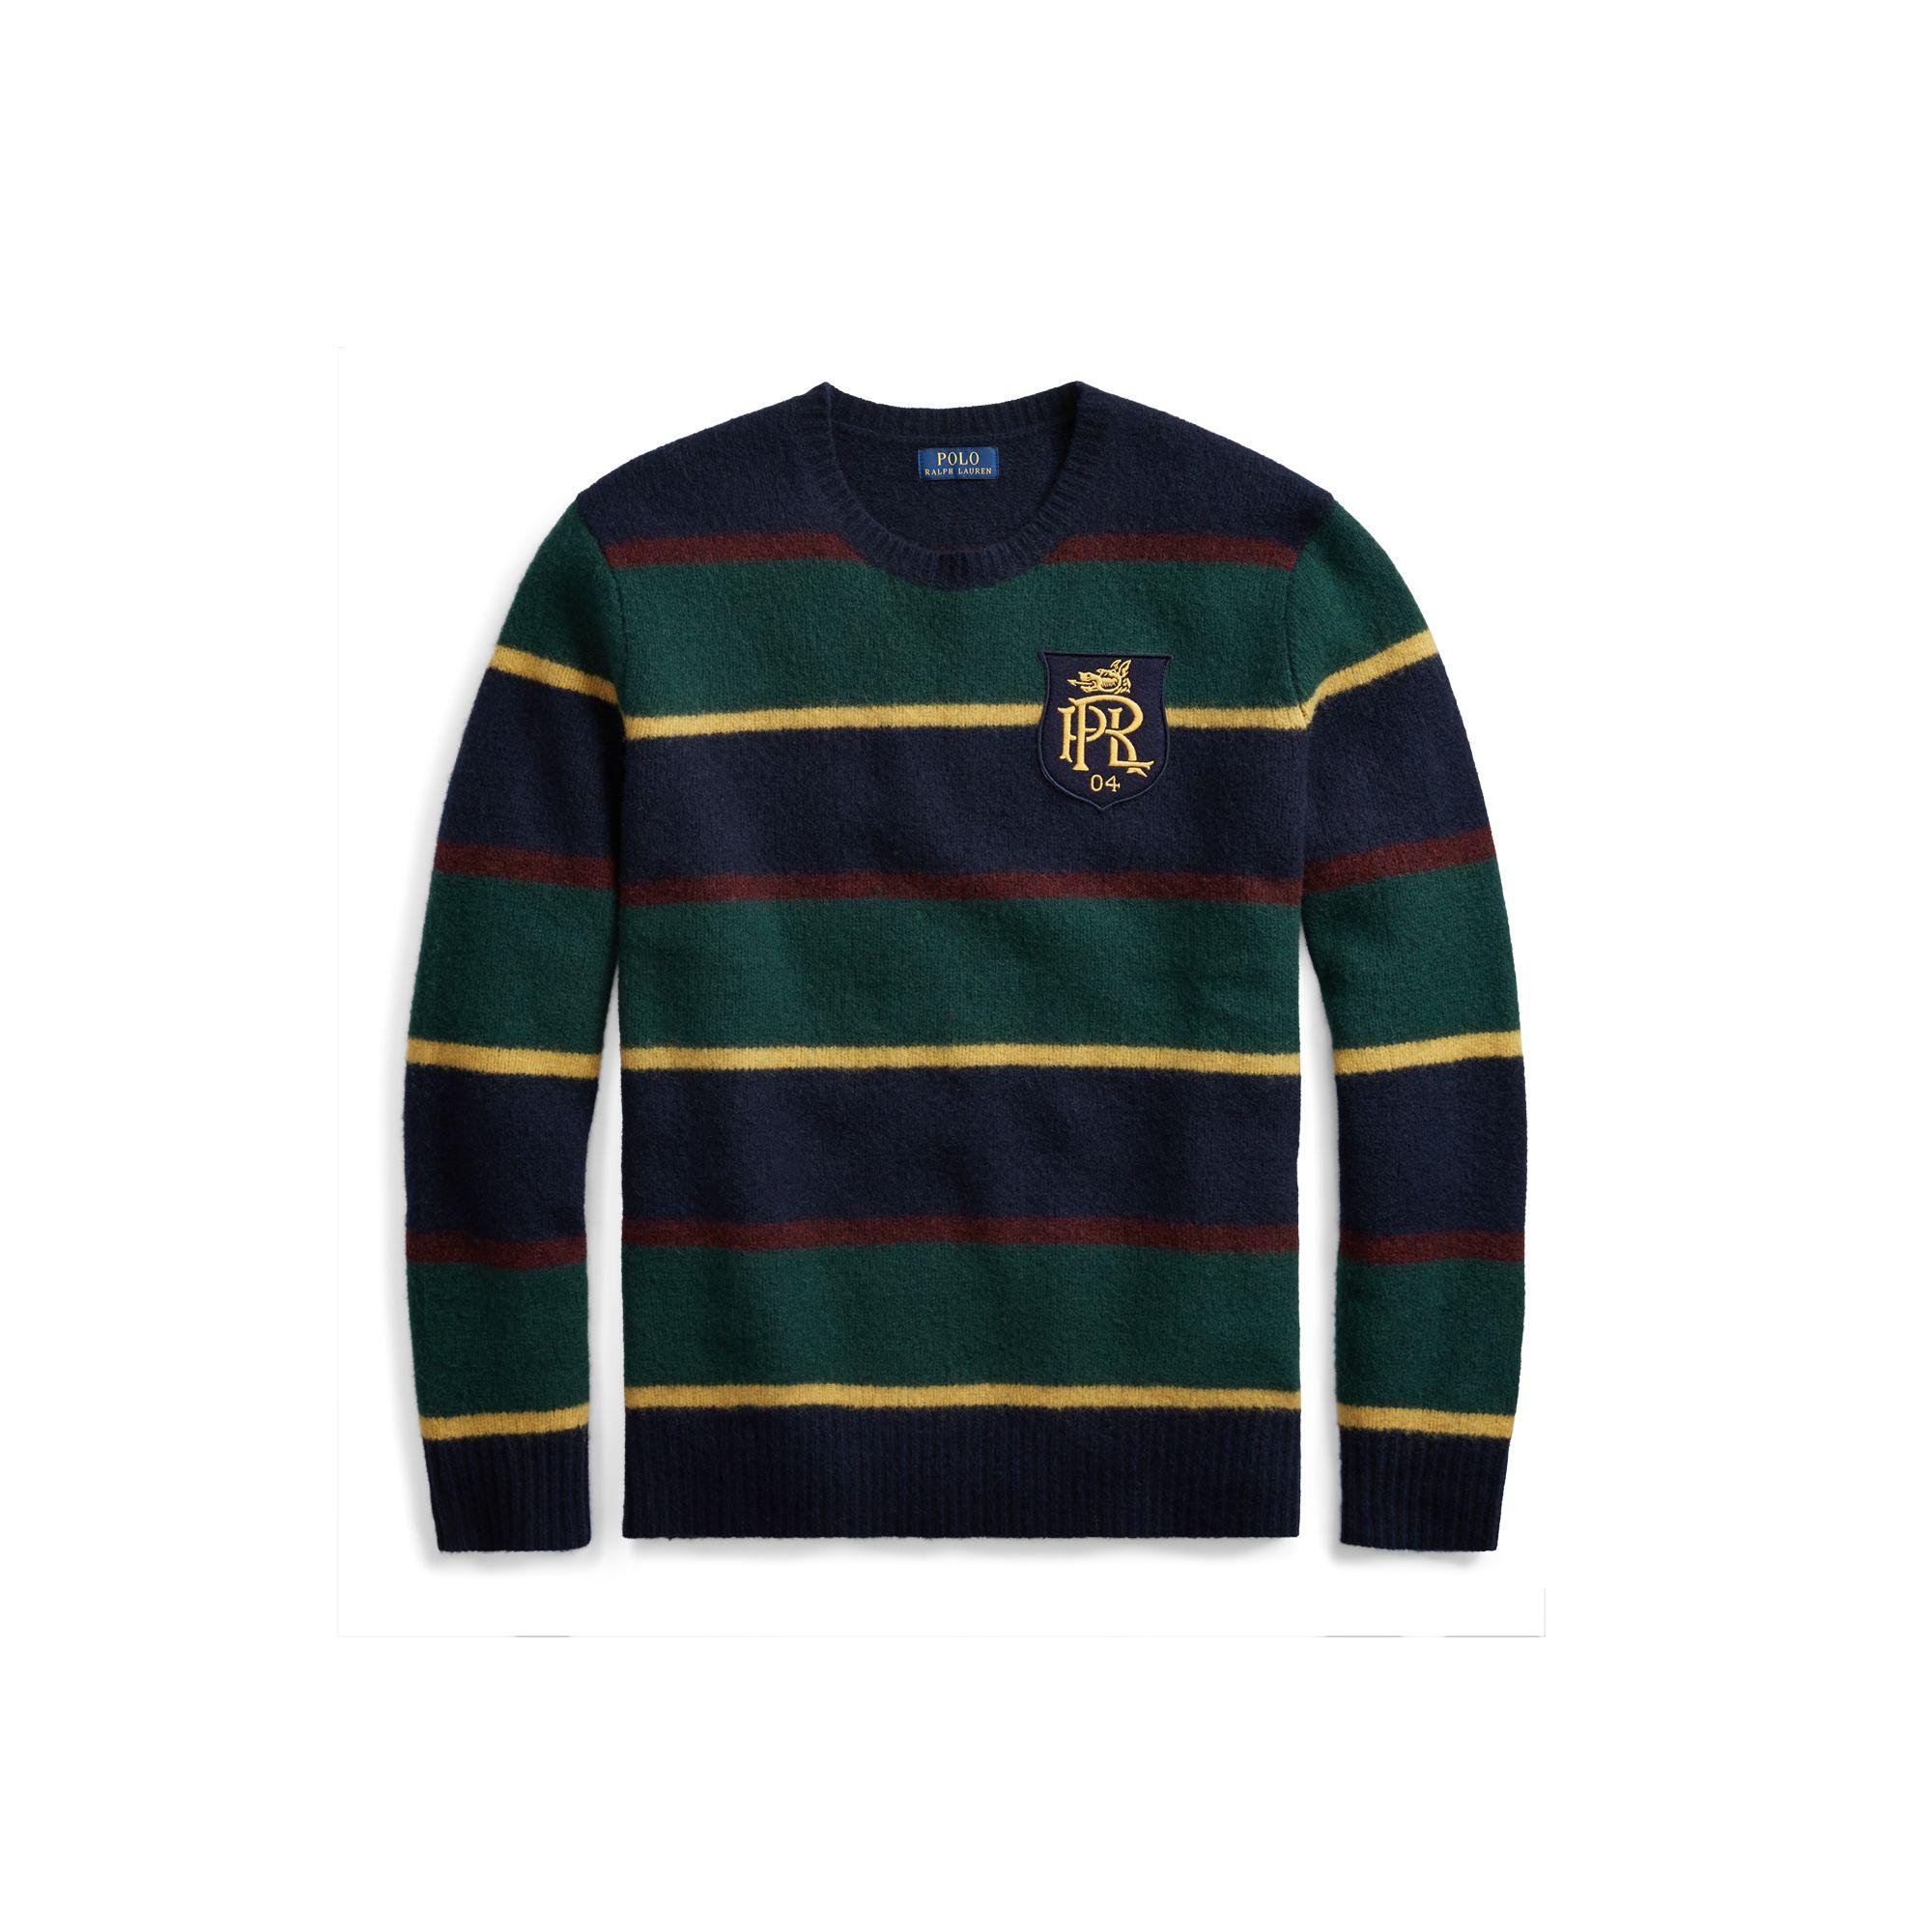 Polo Ralph Lauren Striped Merino Wool Sweater in Navy/Gold (Blue 